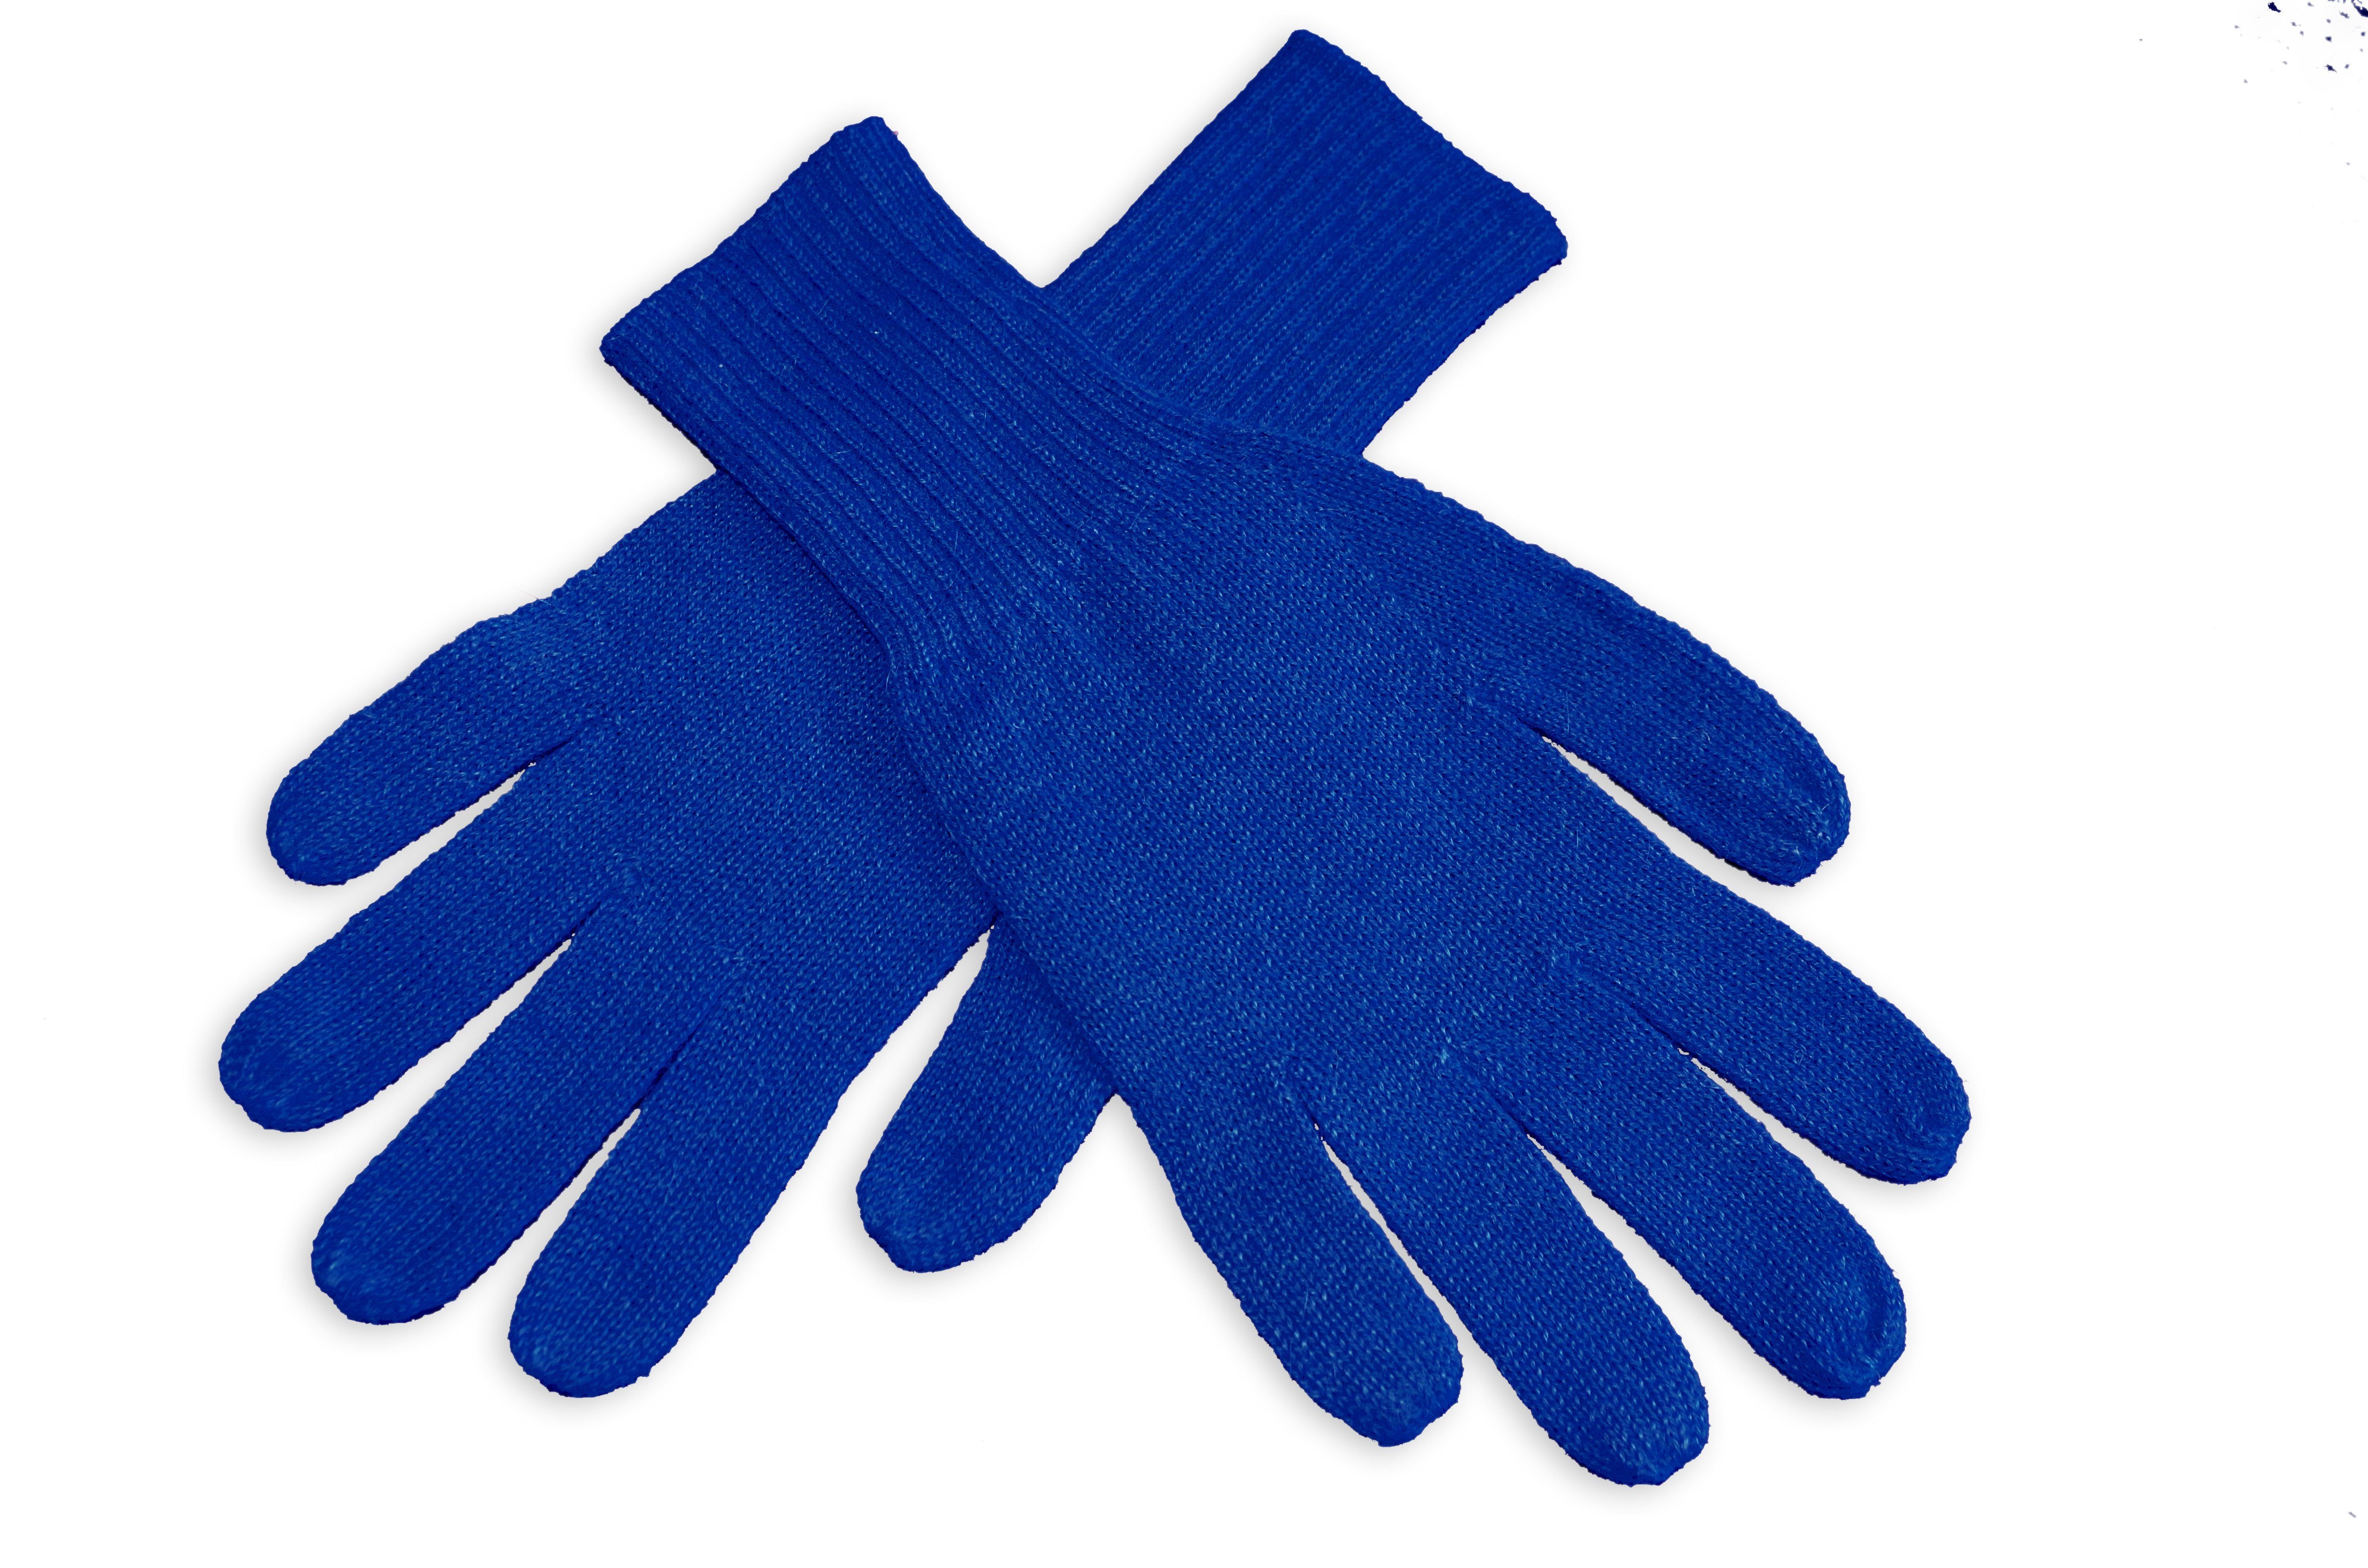 Posh Gear Strickhandschuhe Guantino Alpaka Fingerhandschuhe aus 100% Alpakawolle dunkel blau | Wollhandschuhe